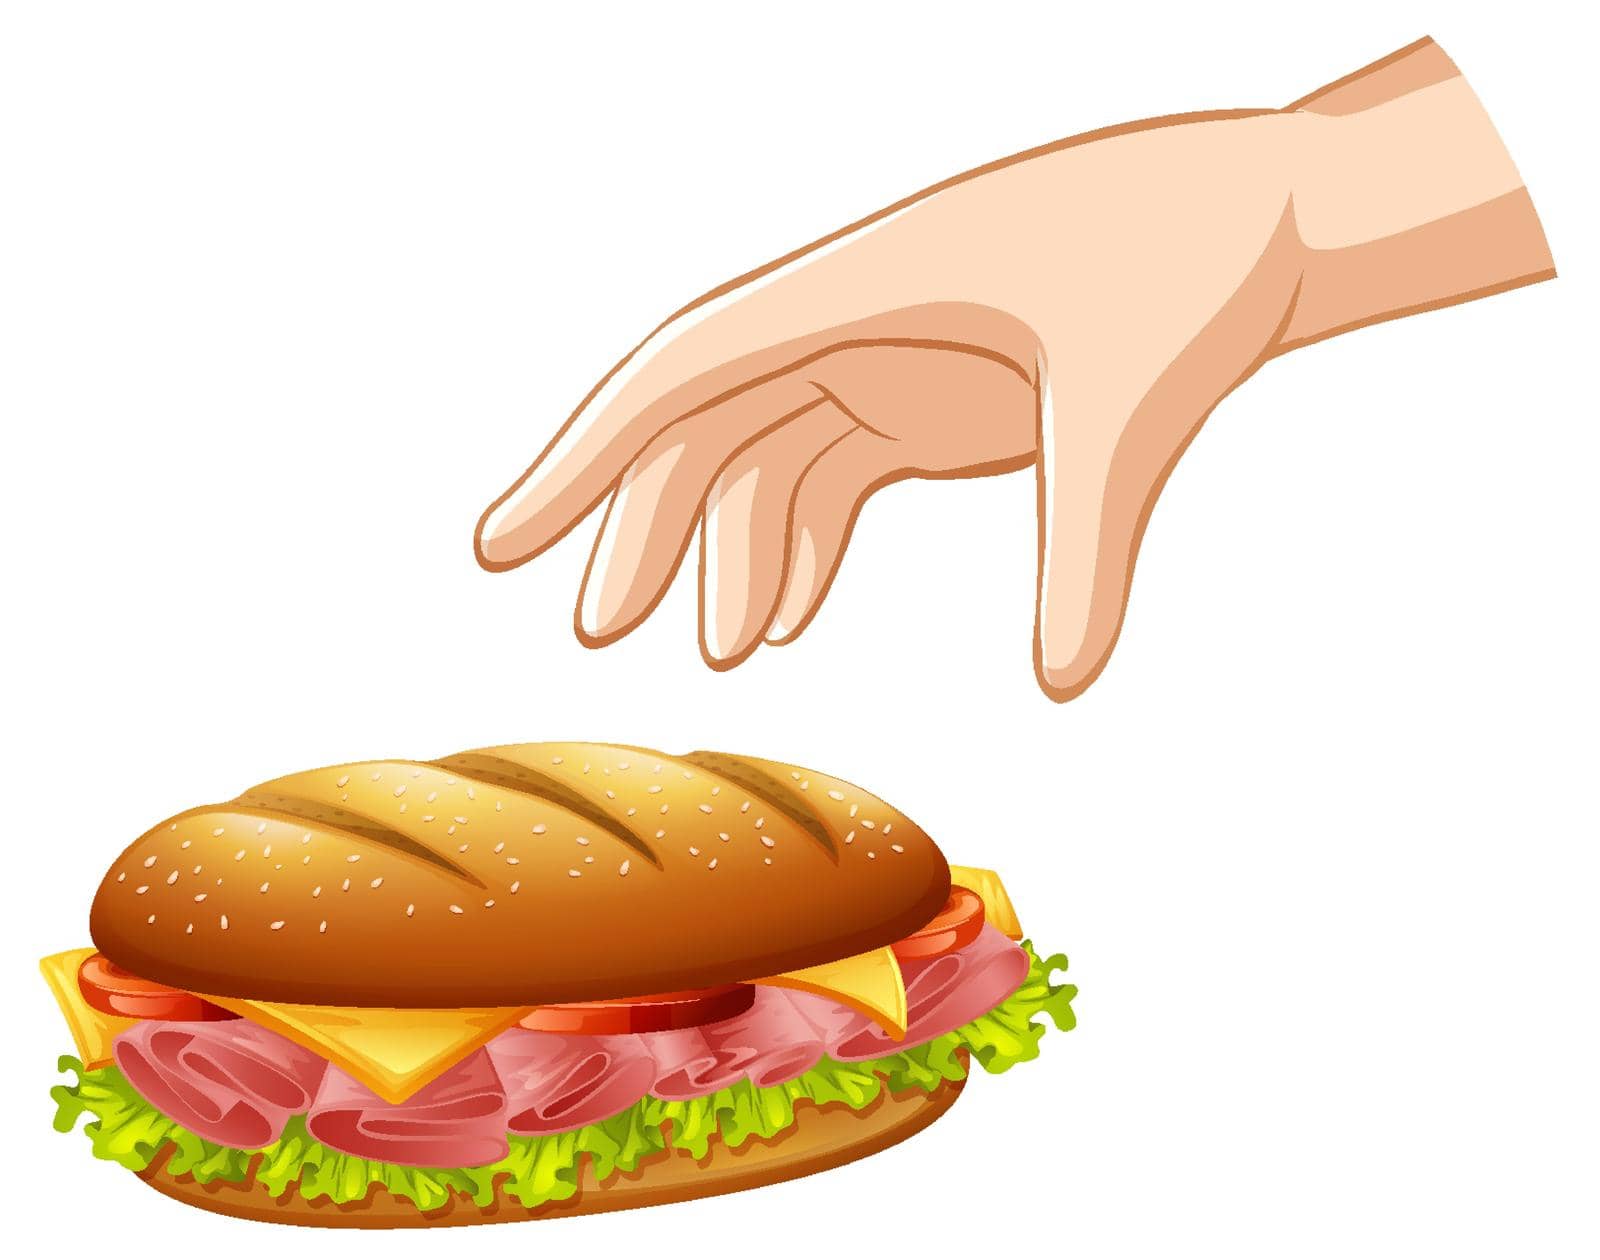 Hand dropping hamburger for gravity experiment illustration